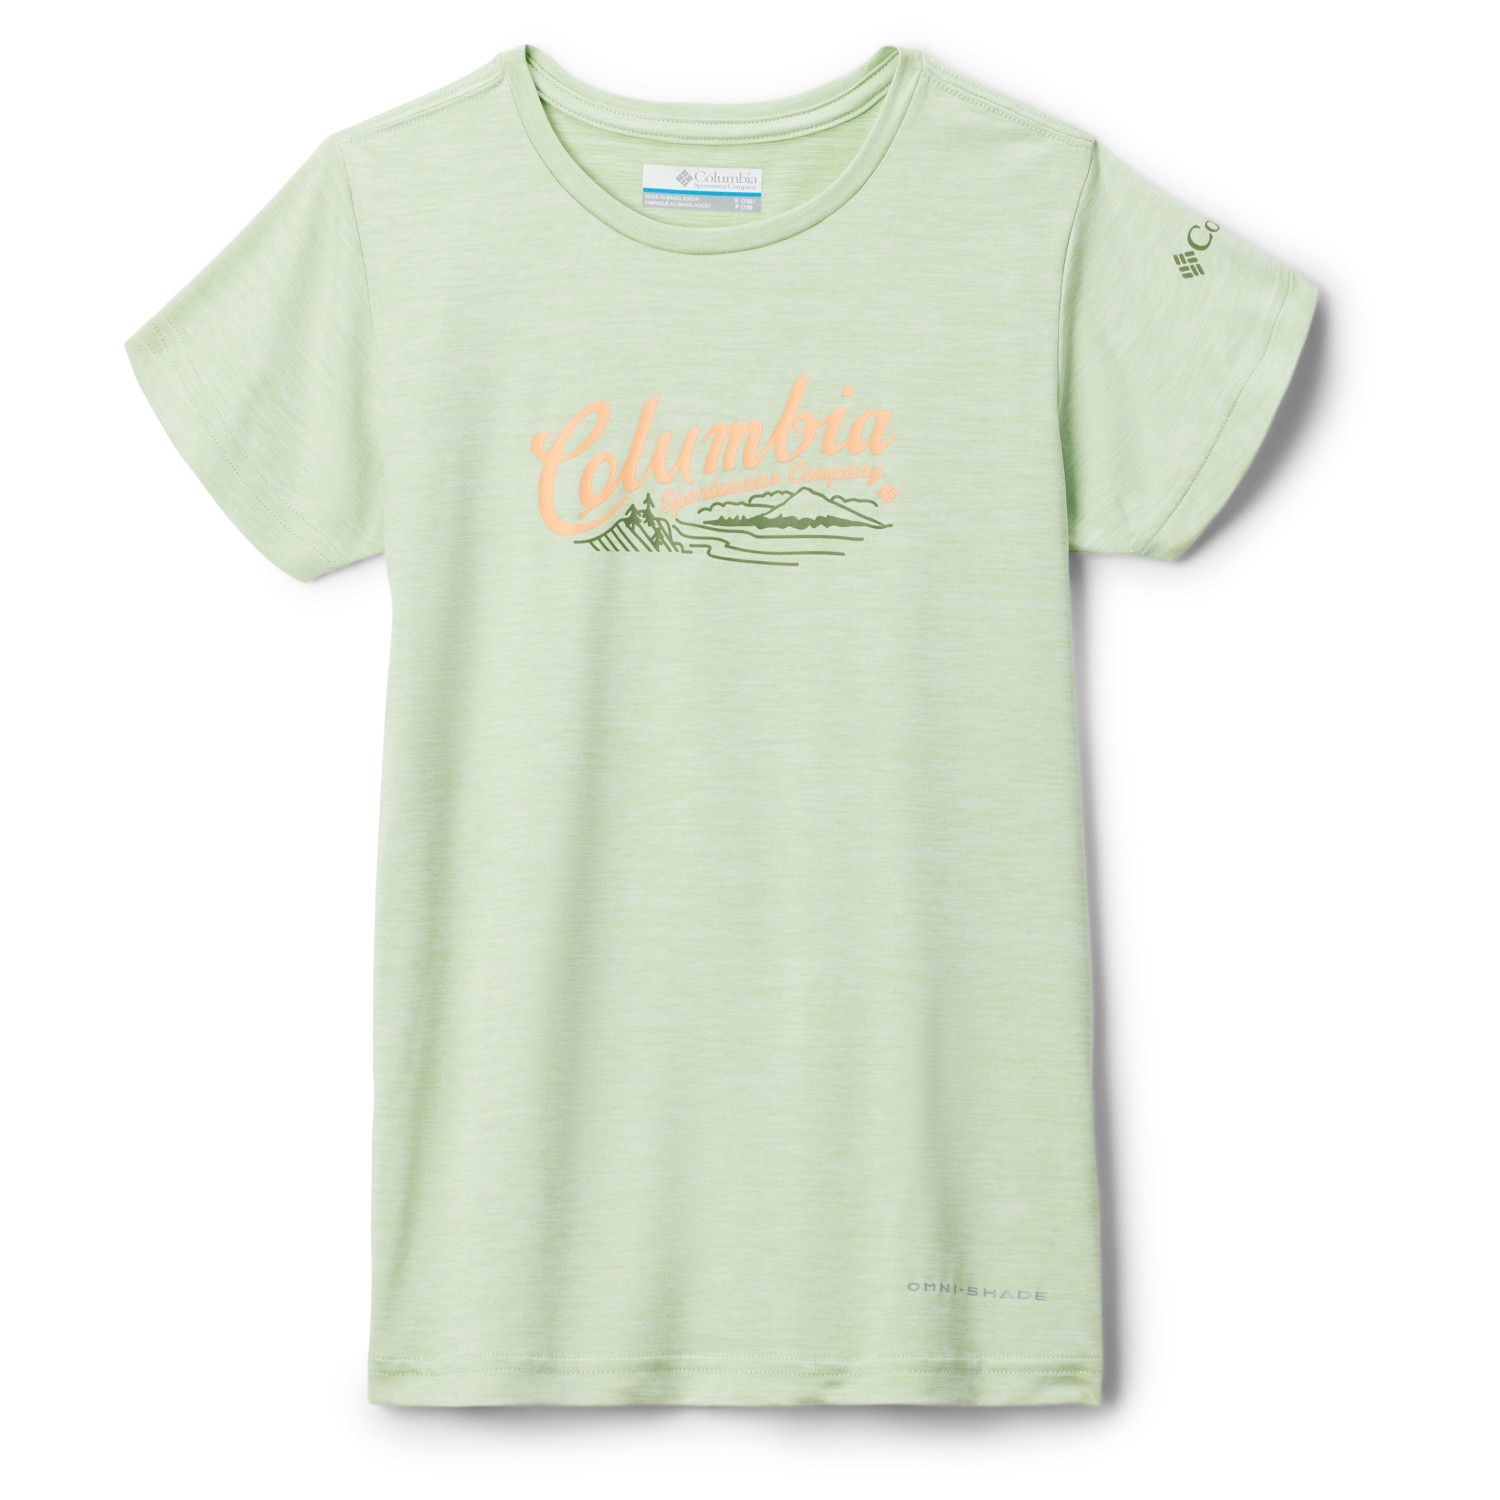 Функциональная рубашка Columbia Kid's Mission Peak Graphic Shirt S/S, цвет Sage Leaf/Scripted Scene рубашка rip curl apex s s shirt цвет 3021 bone размер m